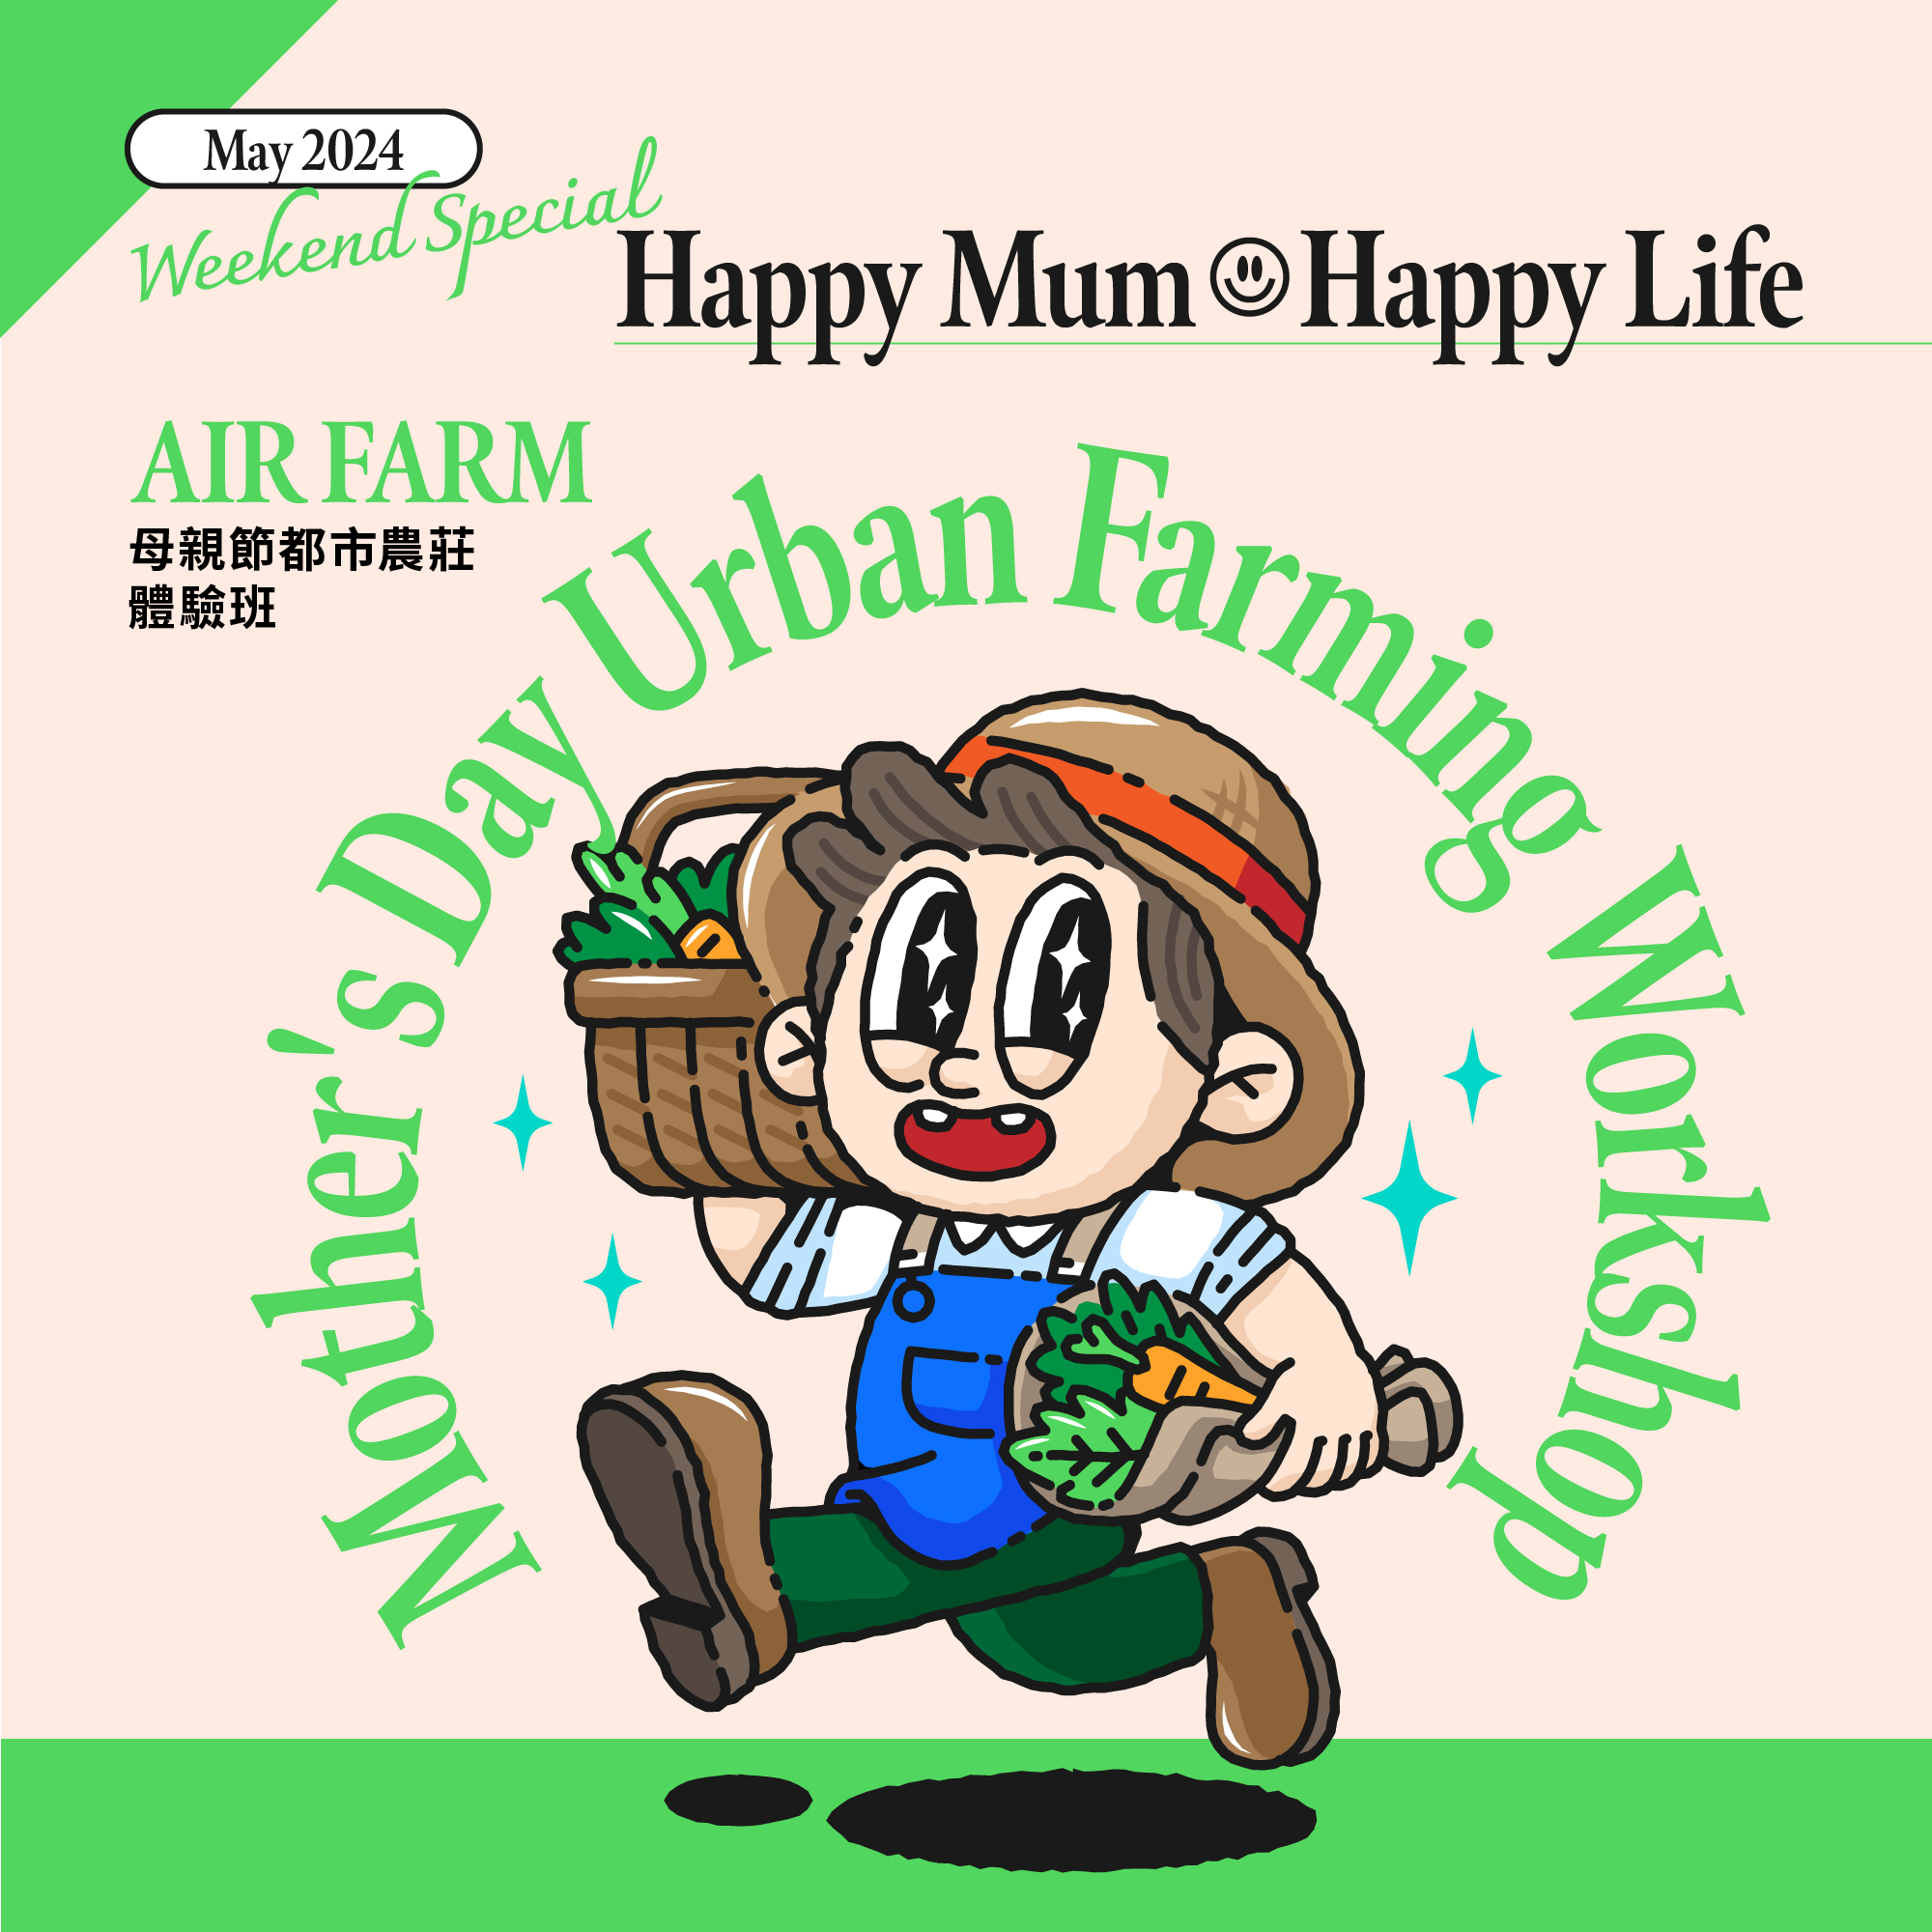 AIR FARM : Mother's Day Urban Farming Workshop